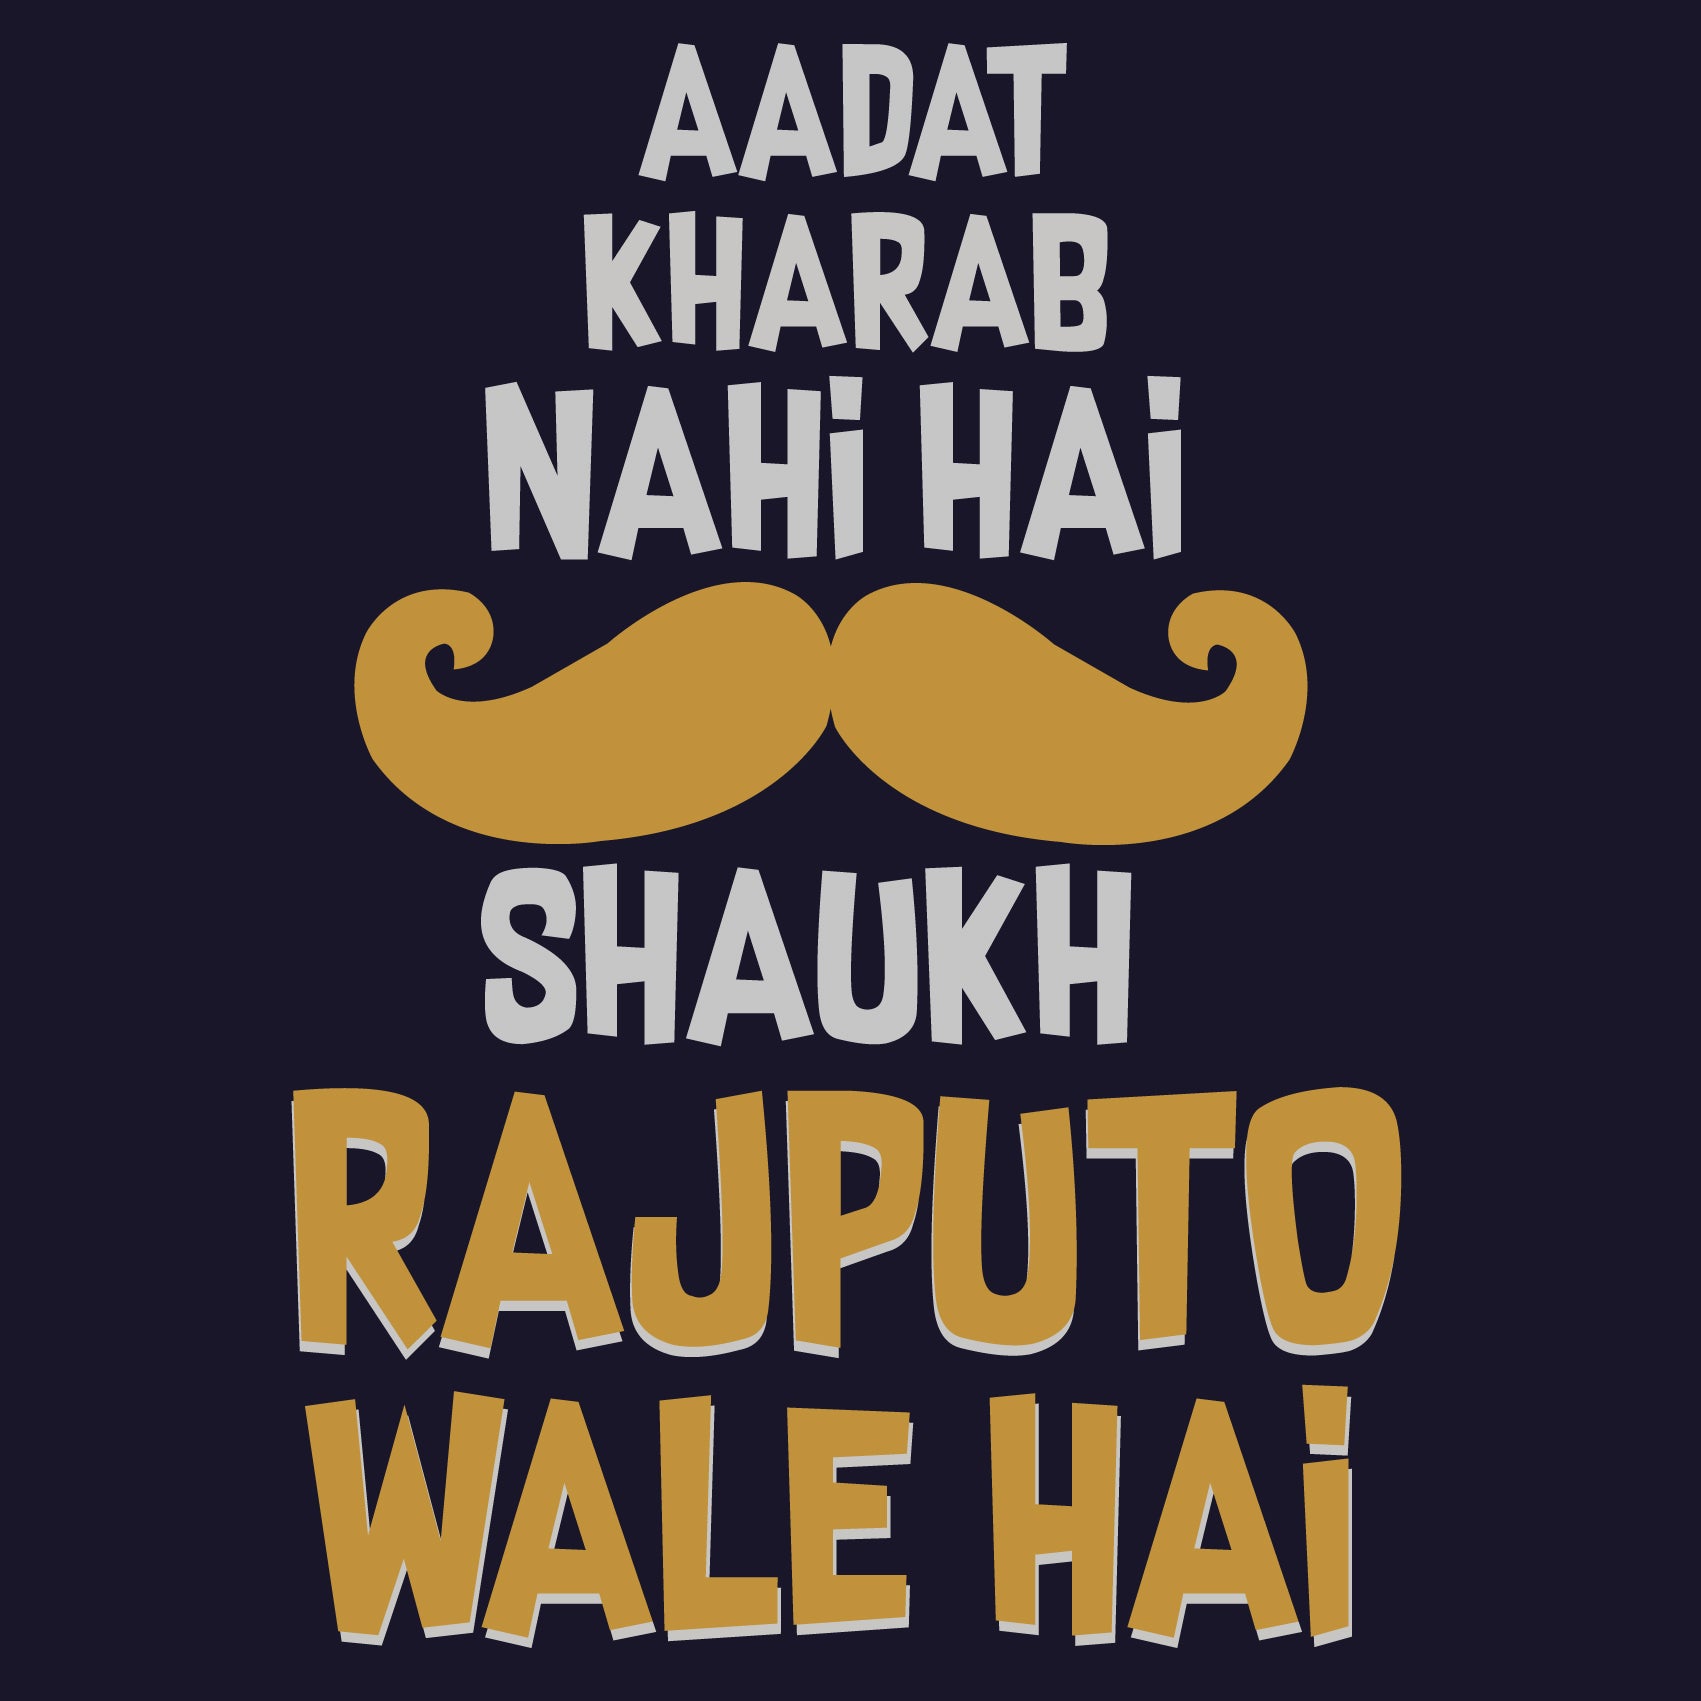 Shauk Rajputo Wale Reactr Tshirts For Men - Eyewearlabs